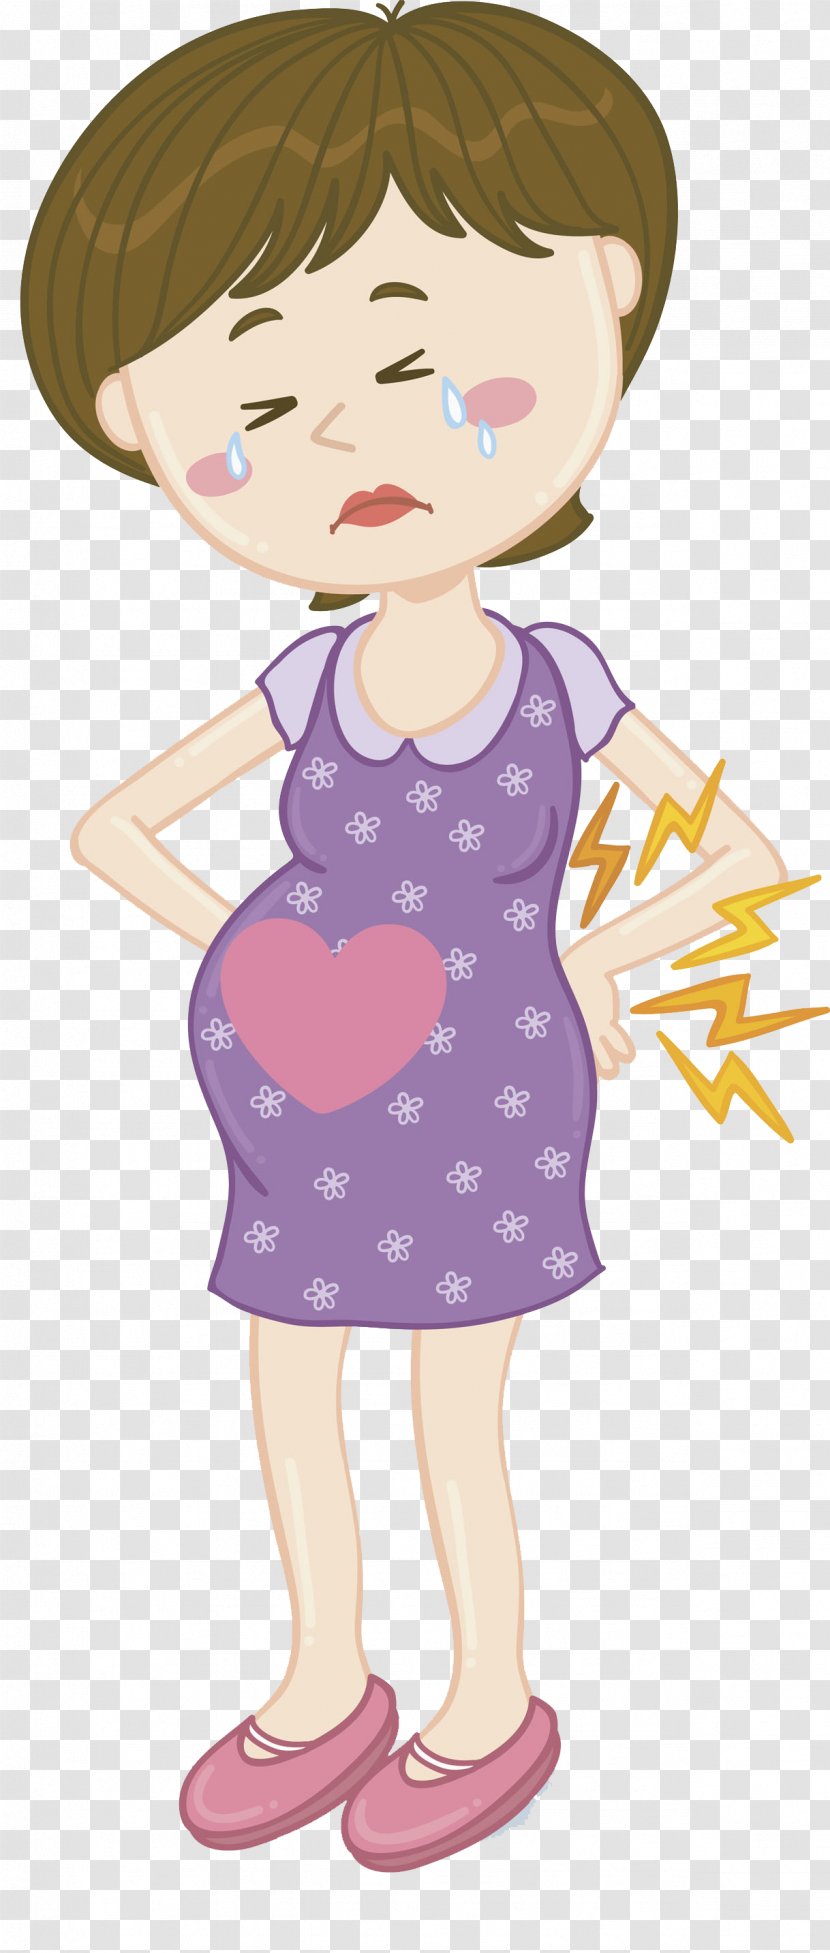 Back Pain Pregnancy Symptom Woman U5b55u5987 - Heart - Sick Pregnant Women Transparent PNG